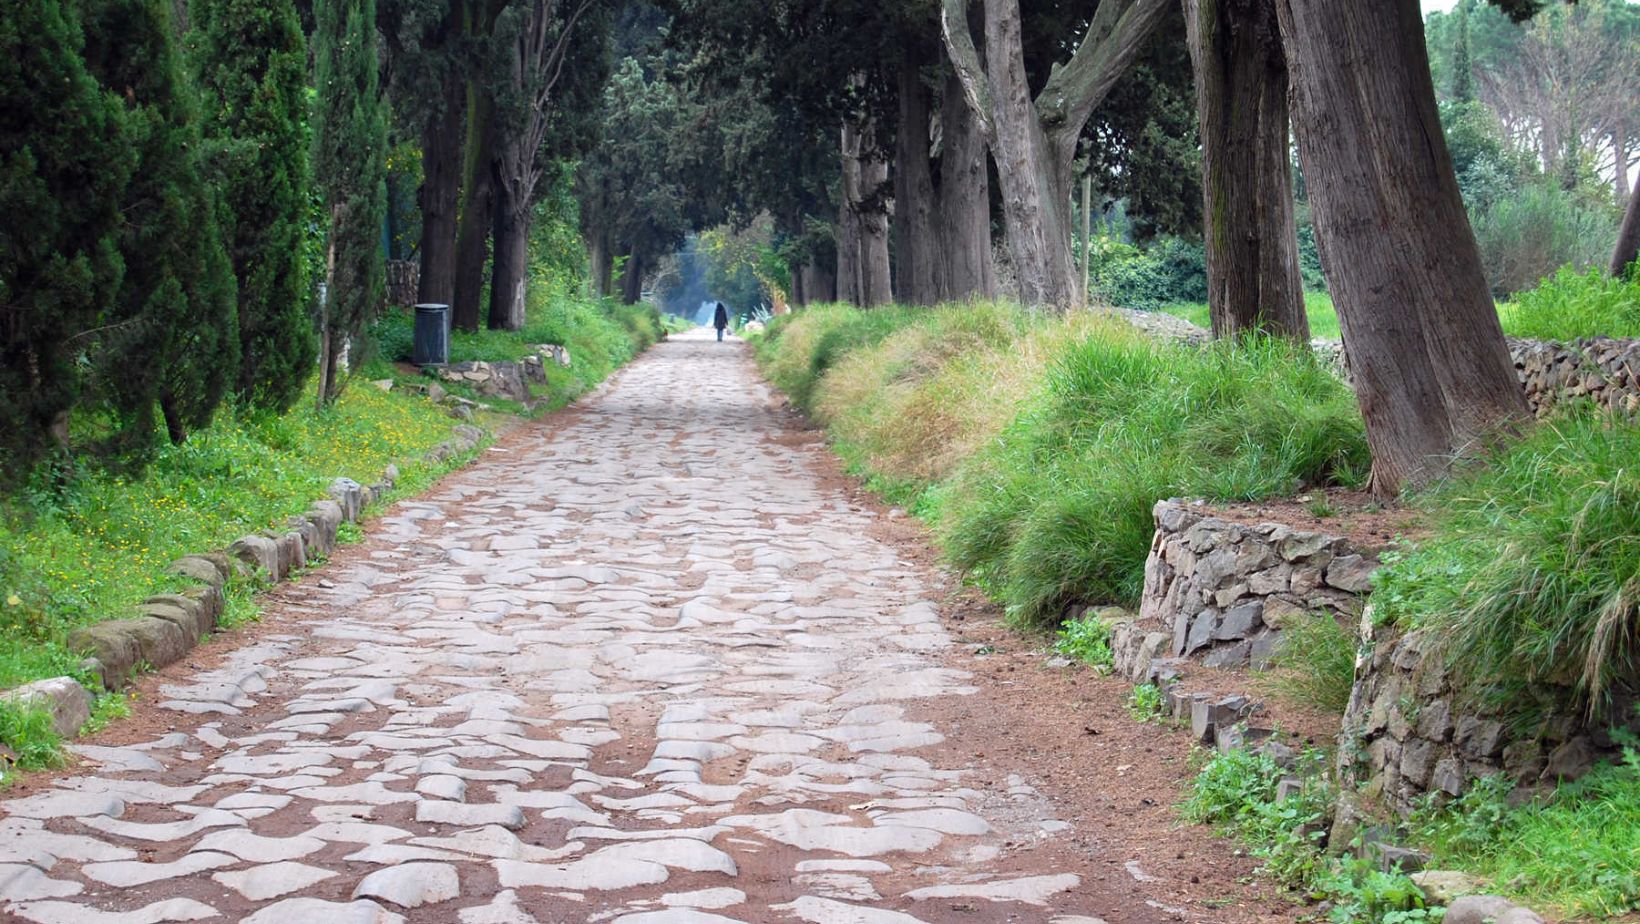 The Appian Way - How did Roman Roads Facilitate Trade